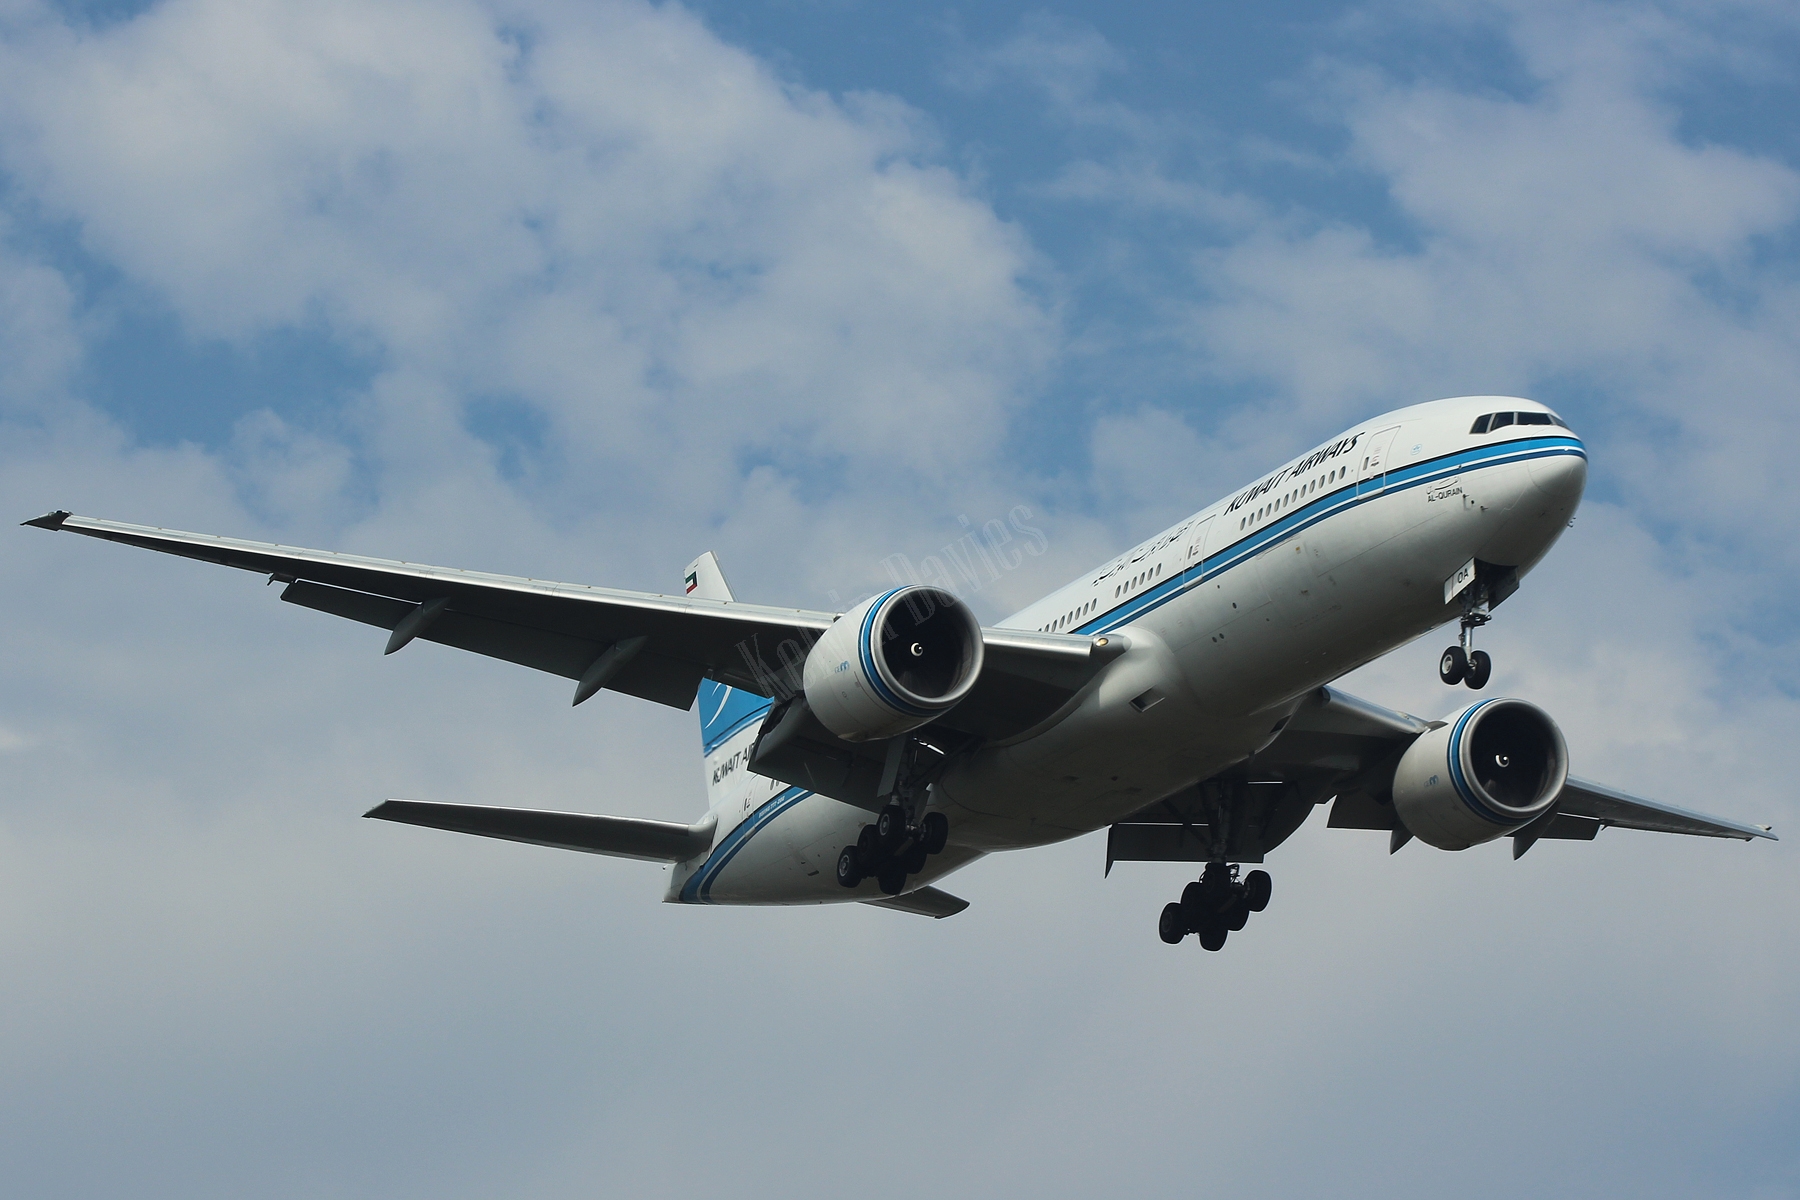 Kuwait Airways 777 9K-AOA